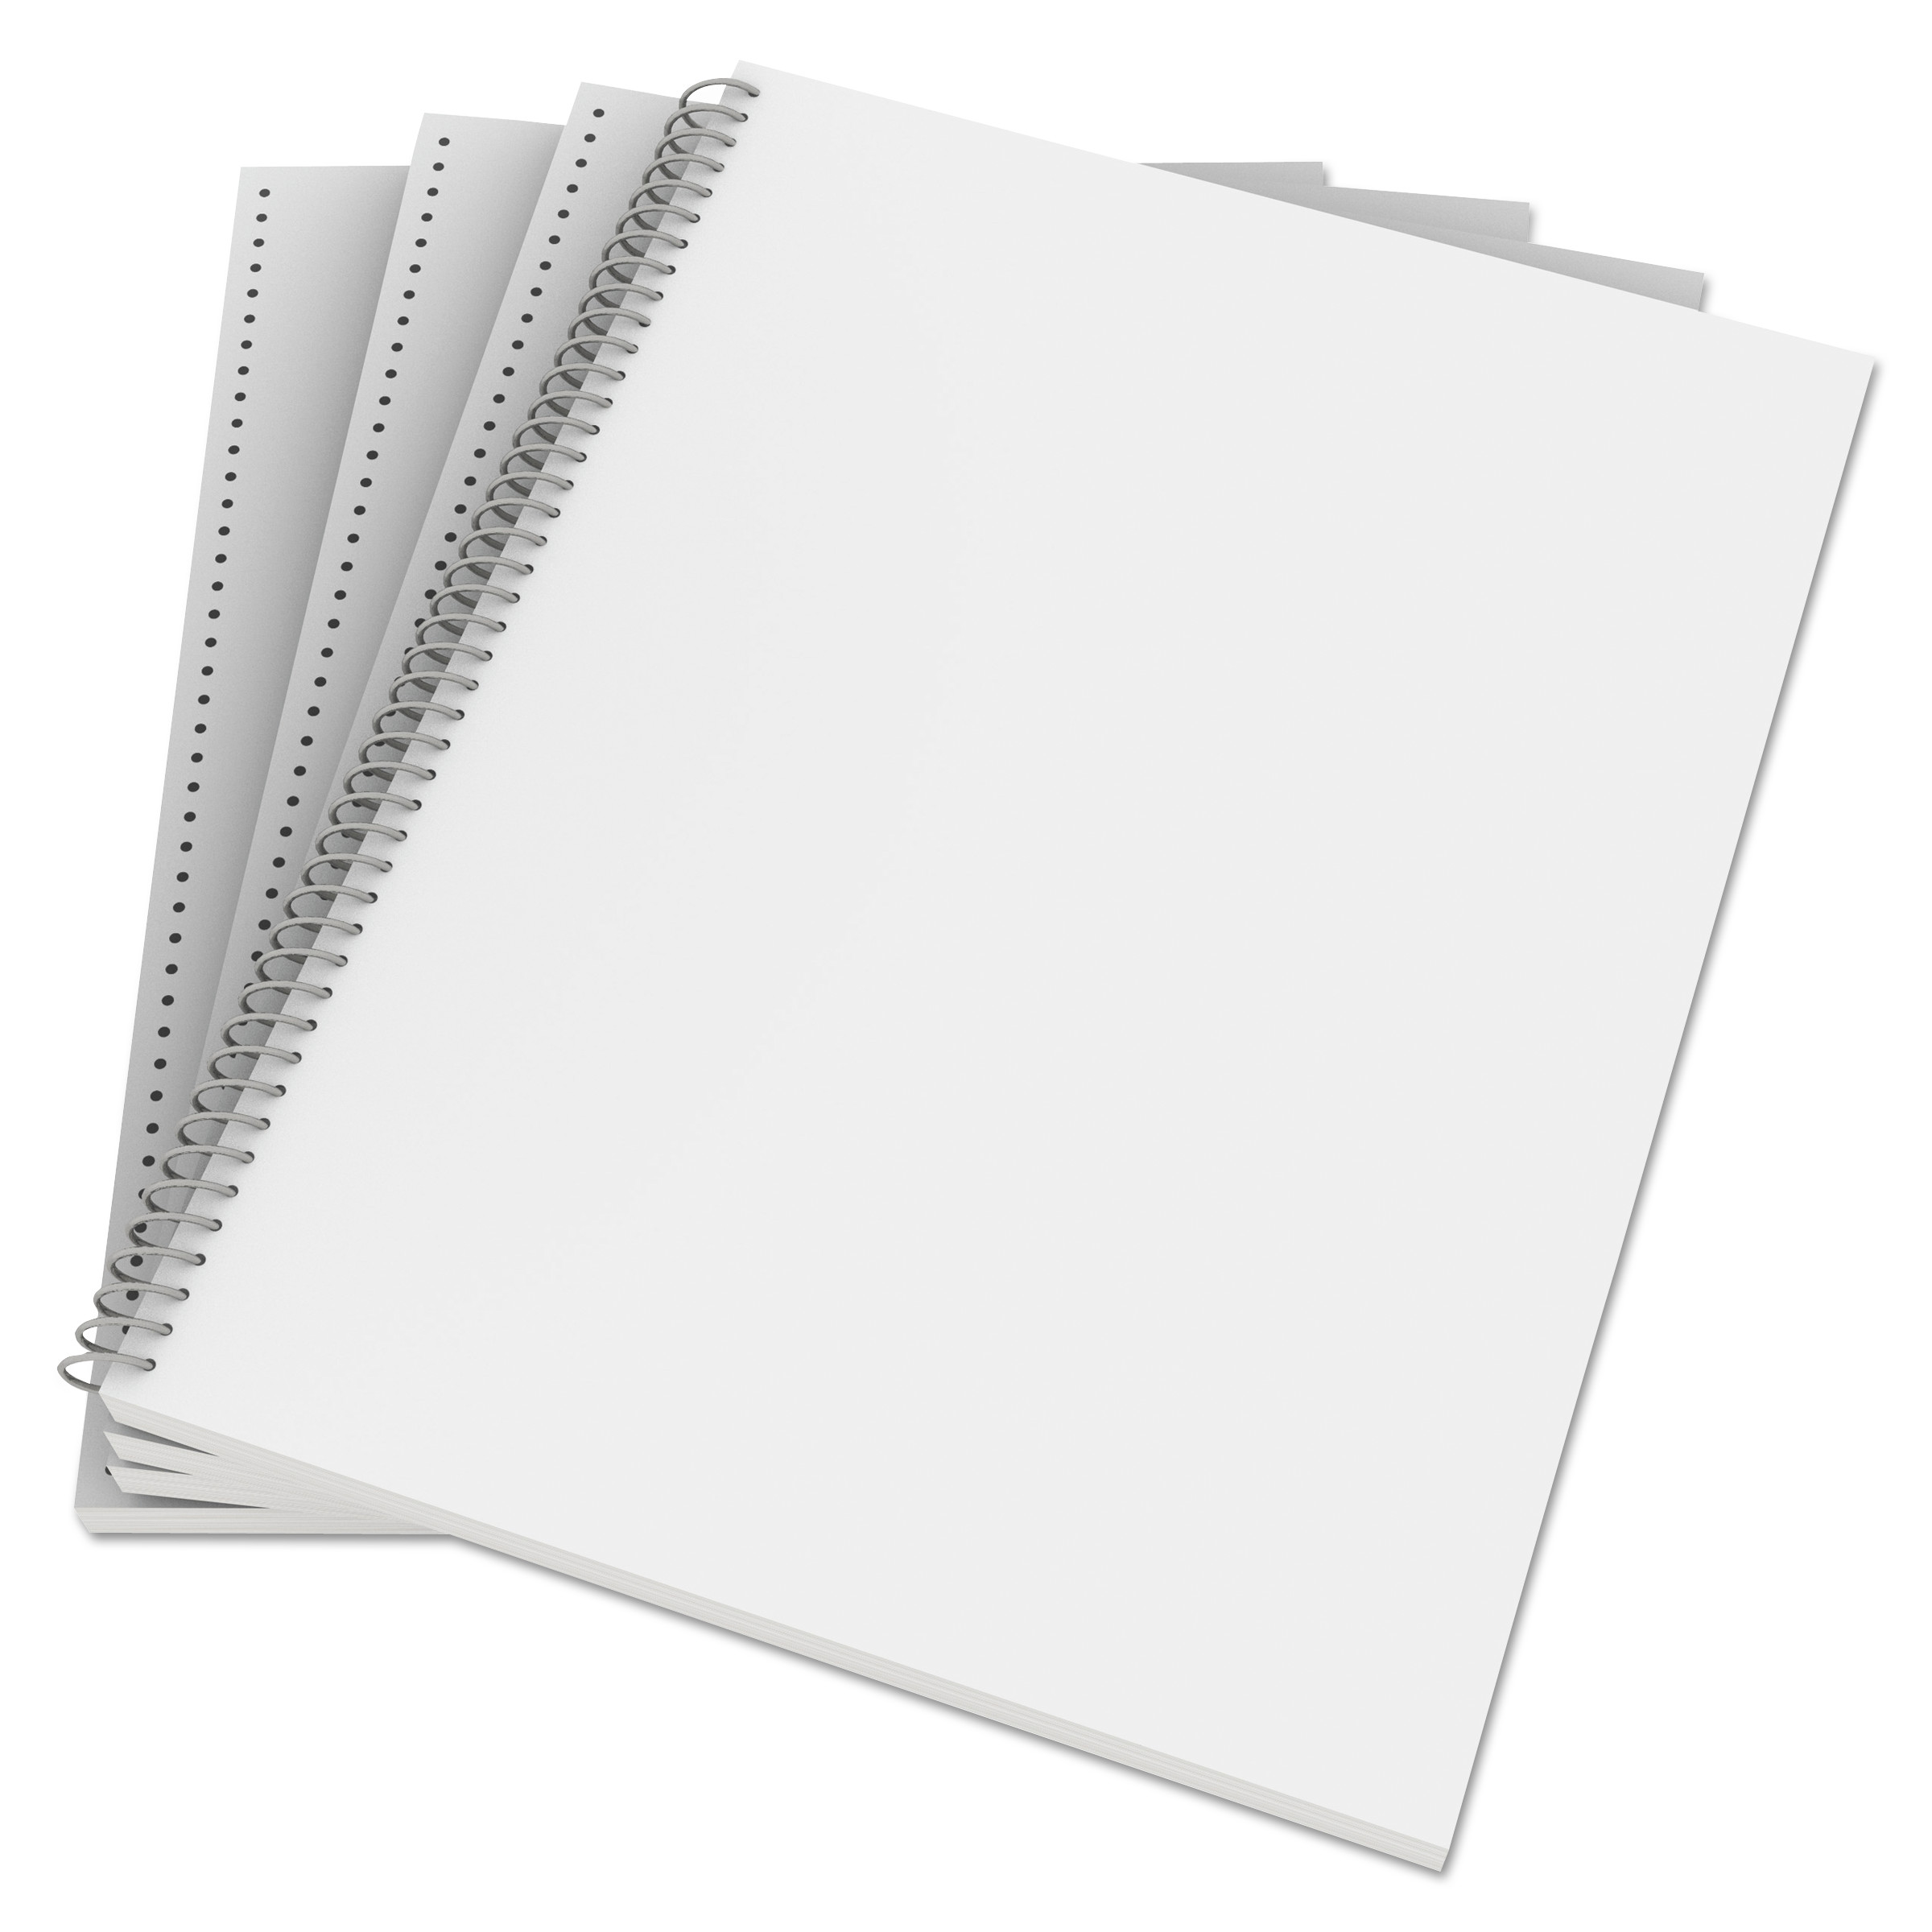  xerox 3R20158 Vitality Multipurpose Paper, 92 Bright, 44-Hole, 20lb, 8.5 x 11, White, 500/Ream (XER3R20158) 